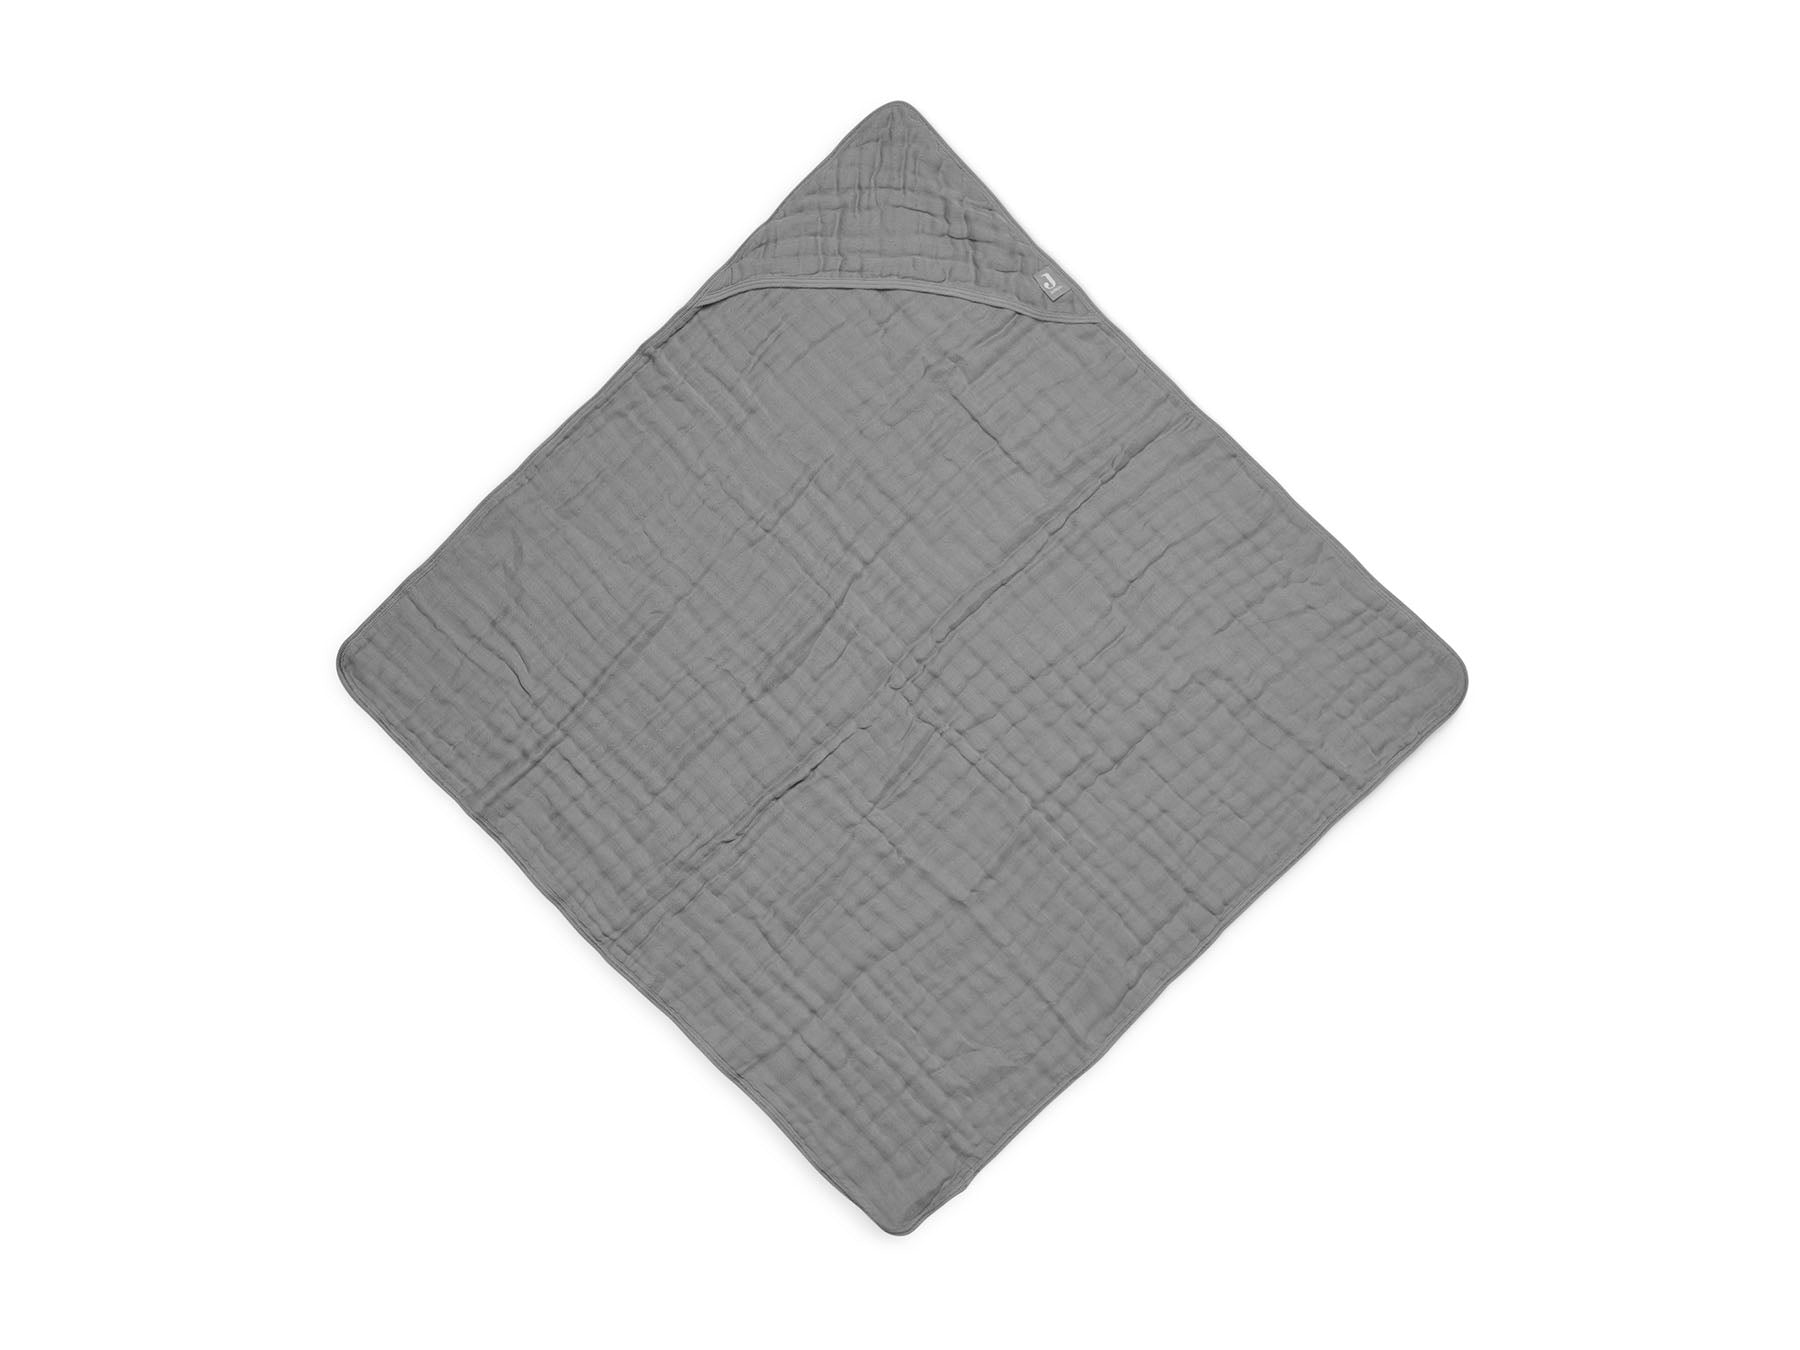 Badcape wrinkled cotton 75x75cm | Storm grey